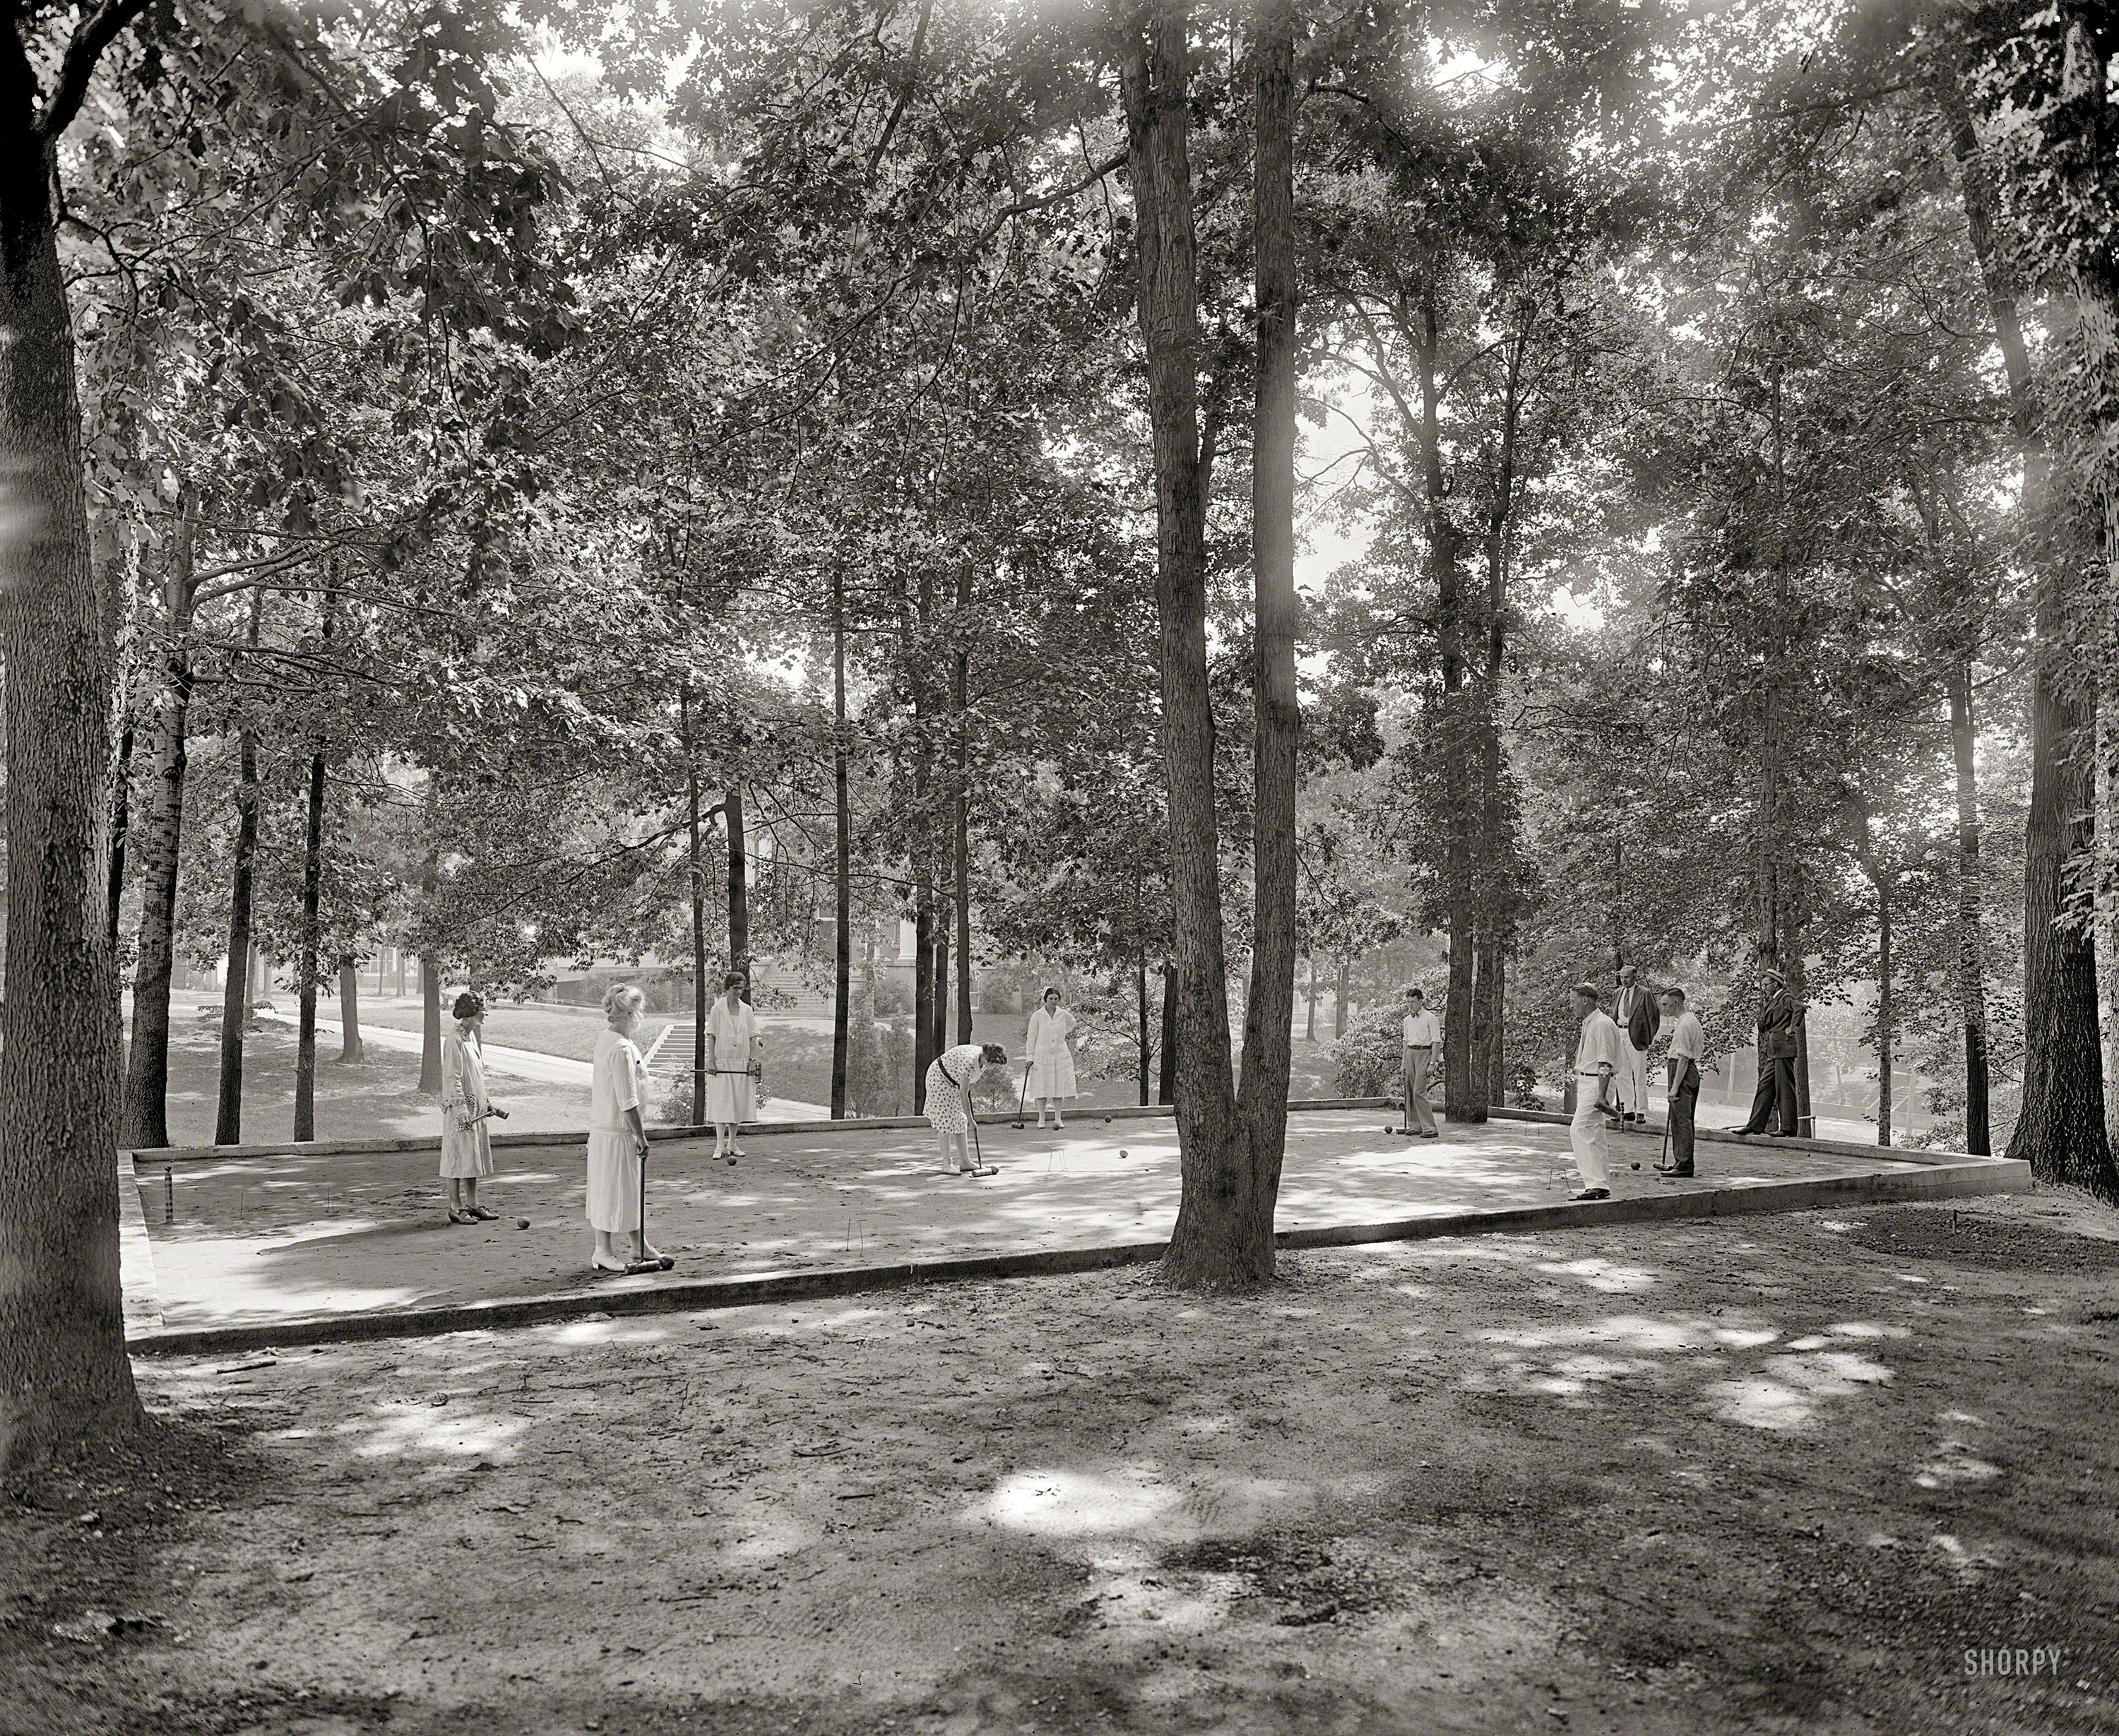 Takoma Park, Maryland, circa 1928. "Washington Sanitarium -- croquet." National Photo Company Collection glass negative. View full size.